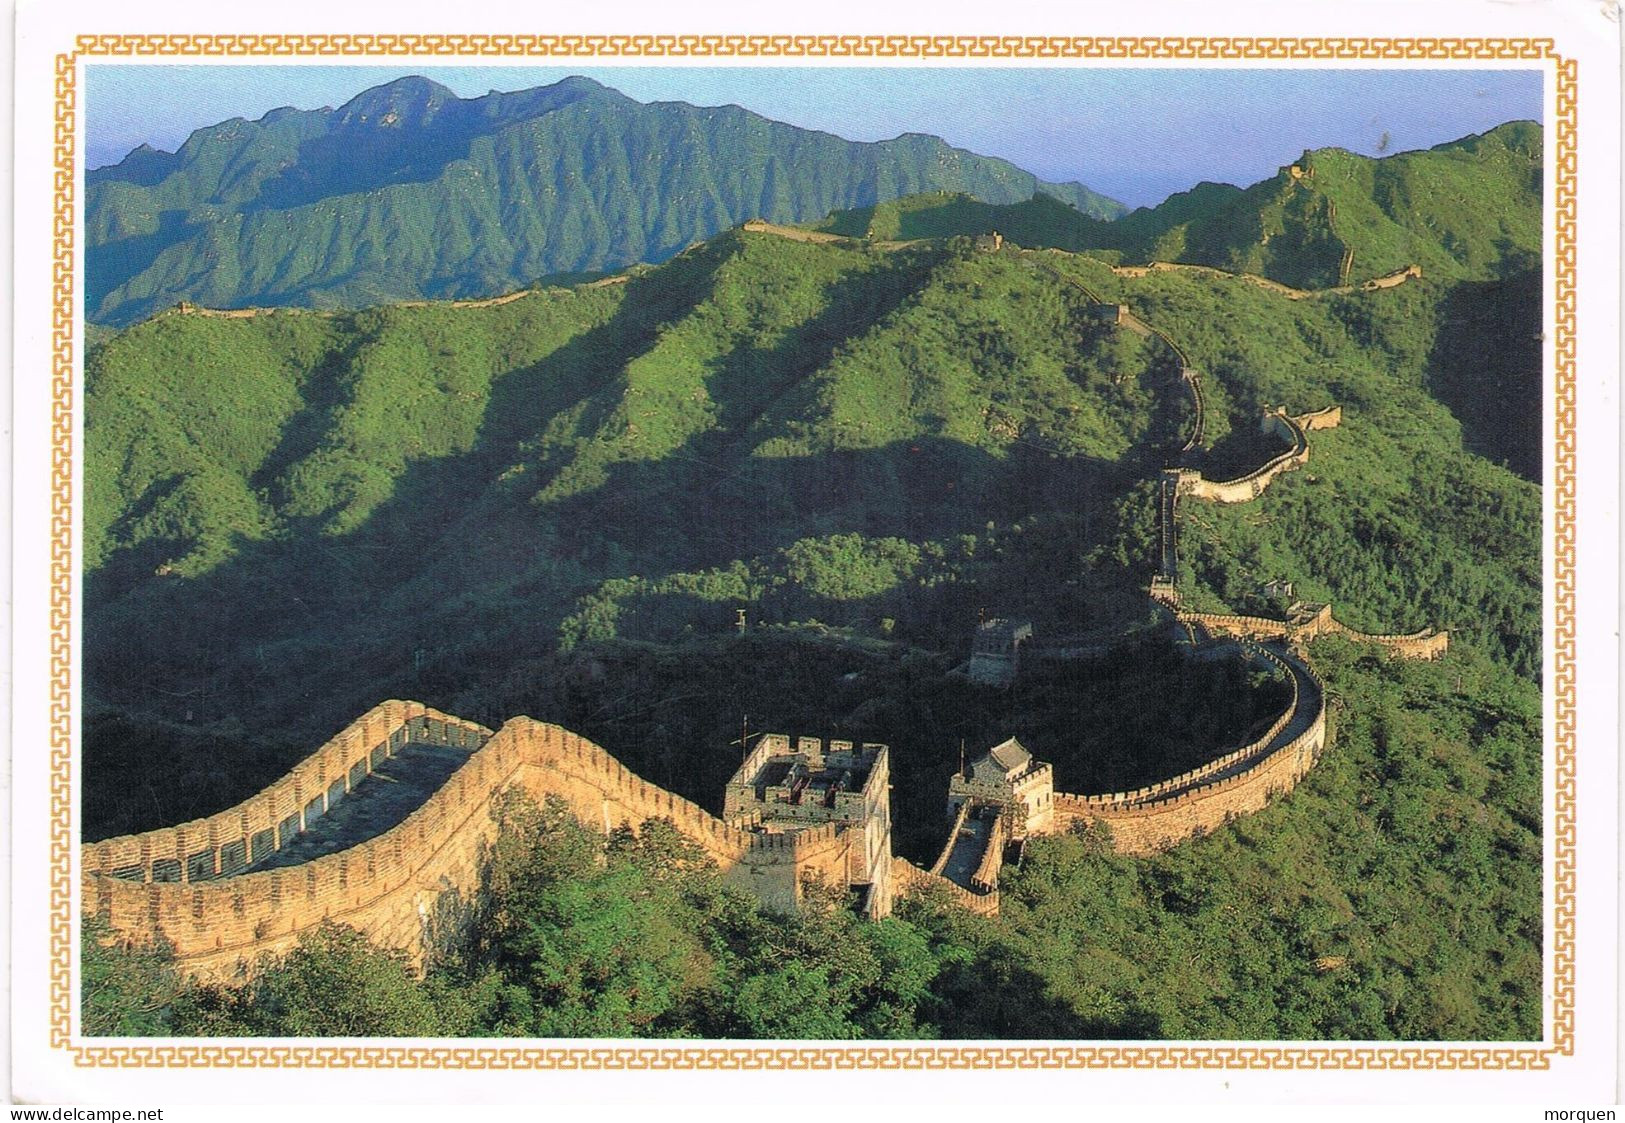 55122. Postal Aerea PEKING (China) 1993- Vista De La GRAN MURALLA De MUTIANYU - Covers & Documents